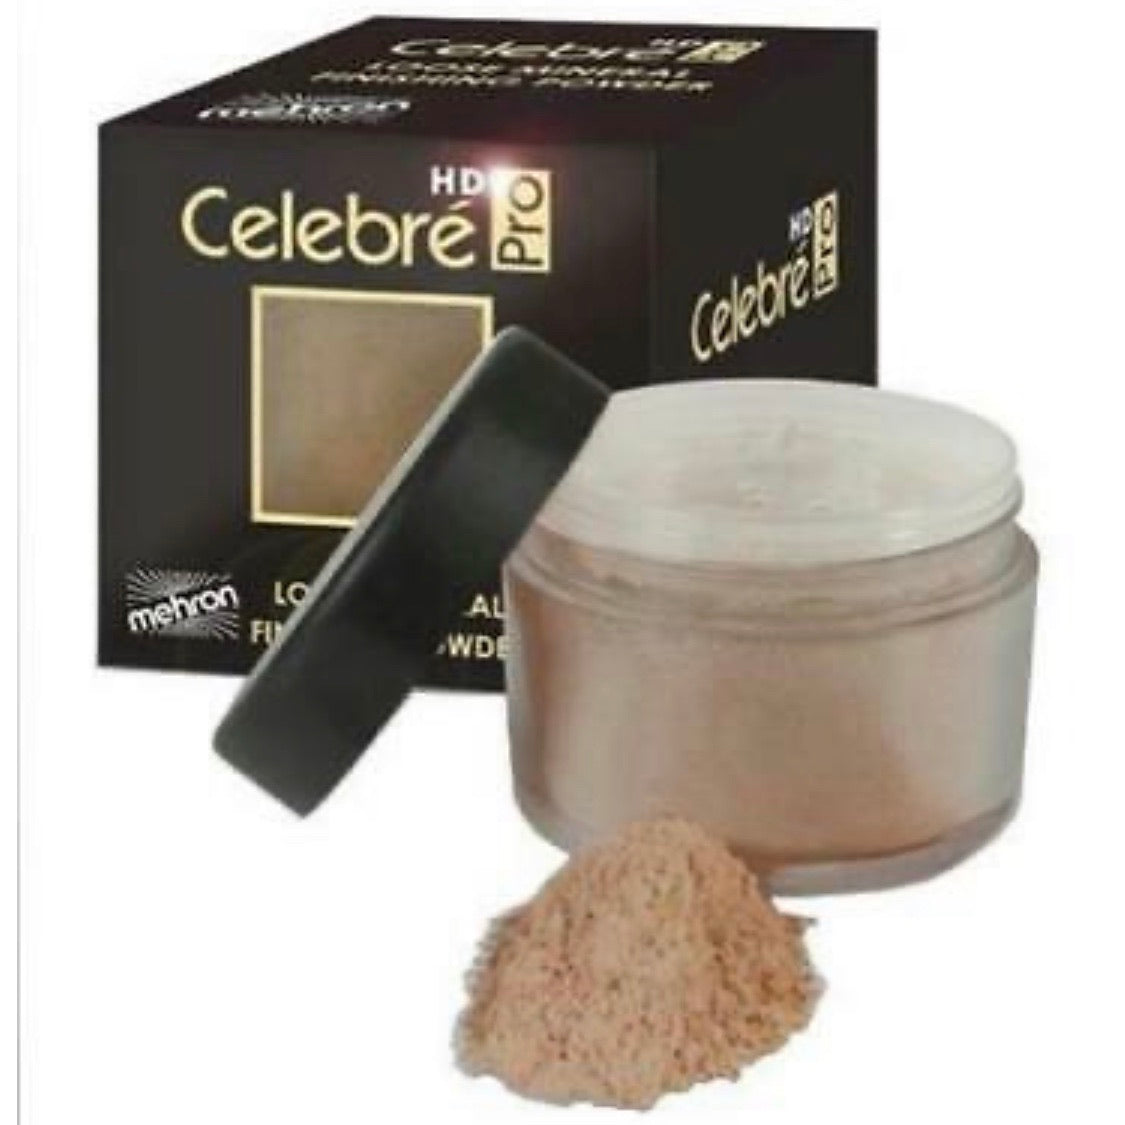 Mehron / Celebre Pro HD Mineral Finishing Powder